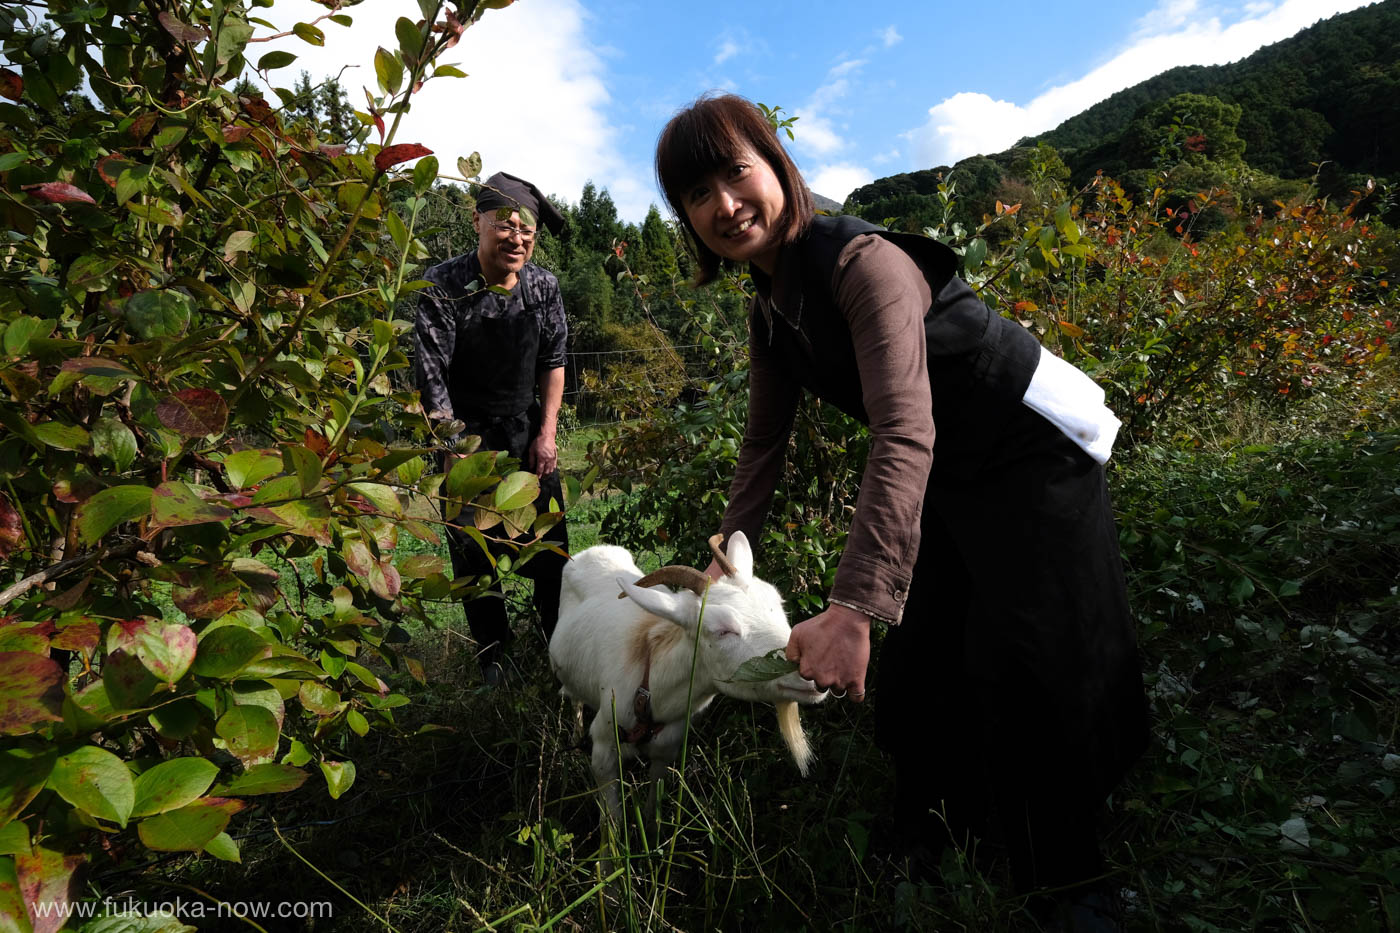 Itoshima Akka Punto Effe - chef Hiroshi Fujita and his wife Hiroko with their goat, 十坊山の麓にある糸島のアグリツーリズモ、イタリアンレストランのアッカプントエッフェ